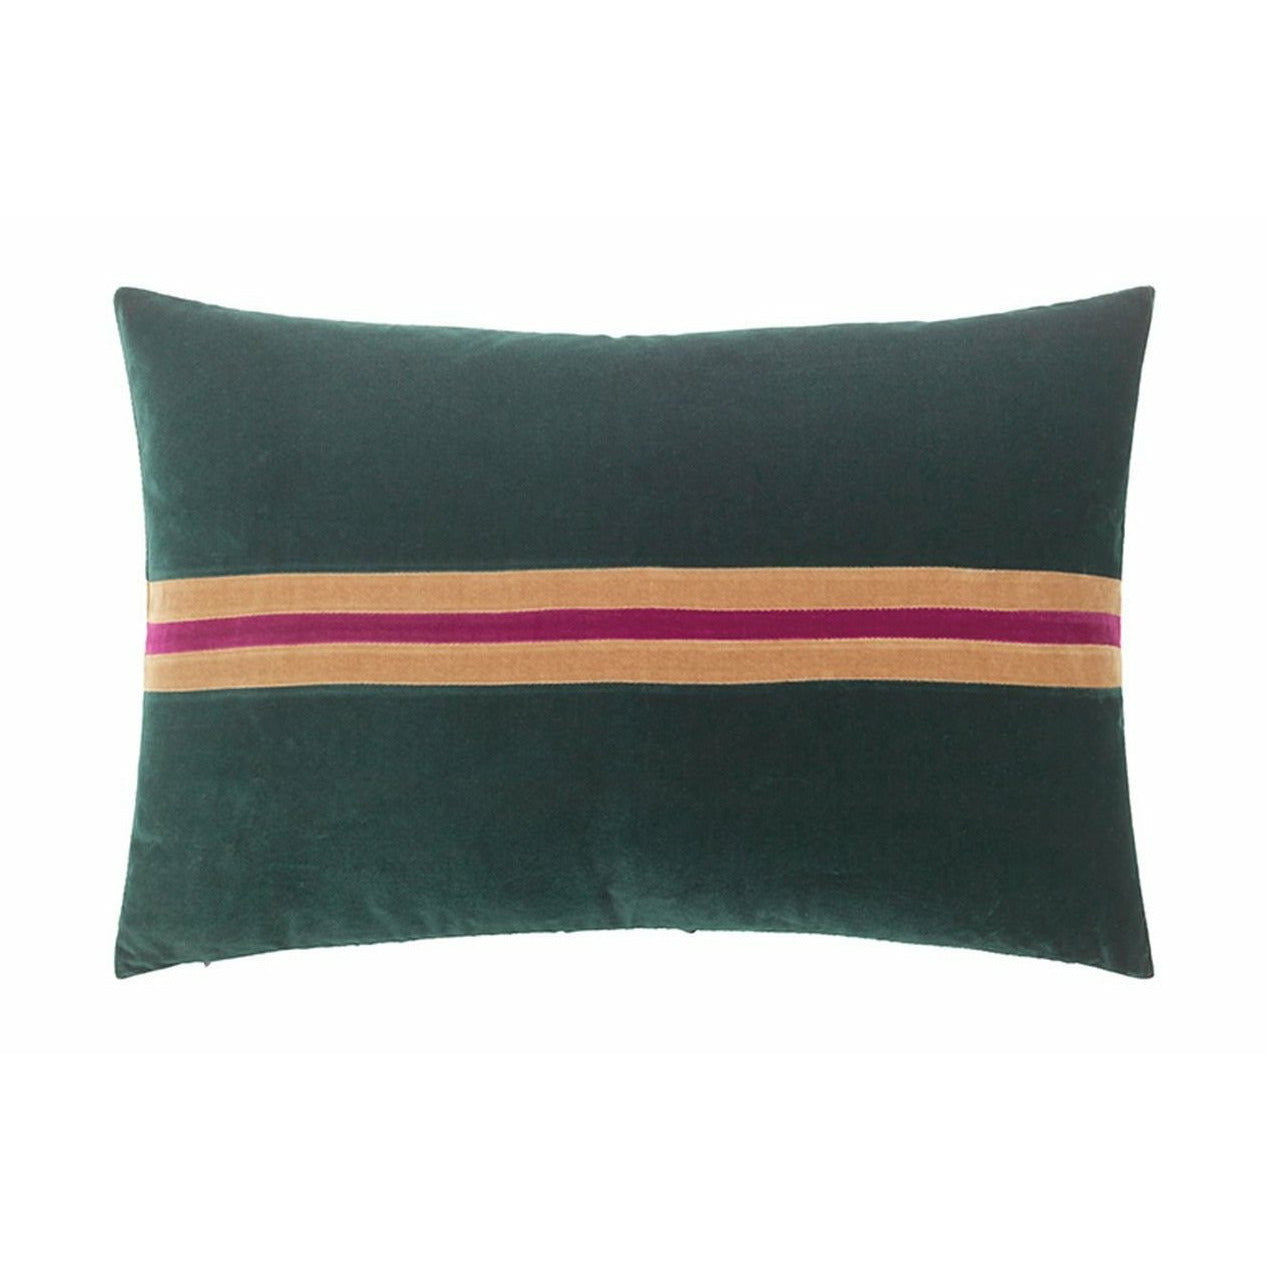 Christina Lundsteen Harlow Velvet Pillow, Emerald/Camel/Anemone